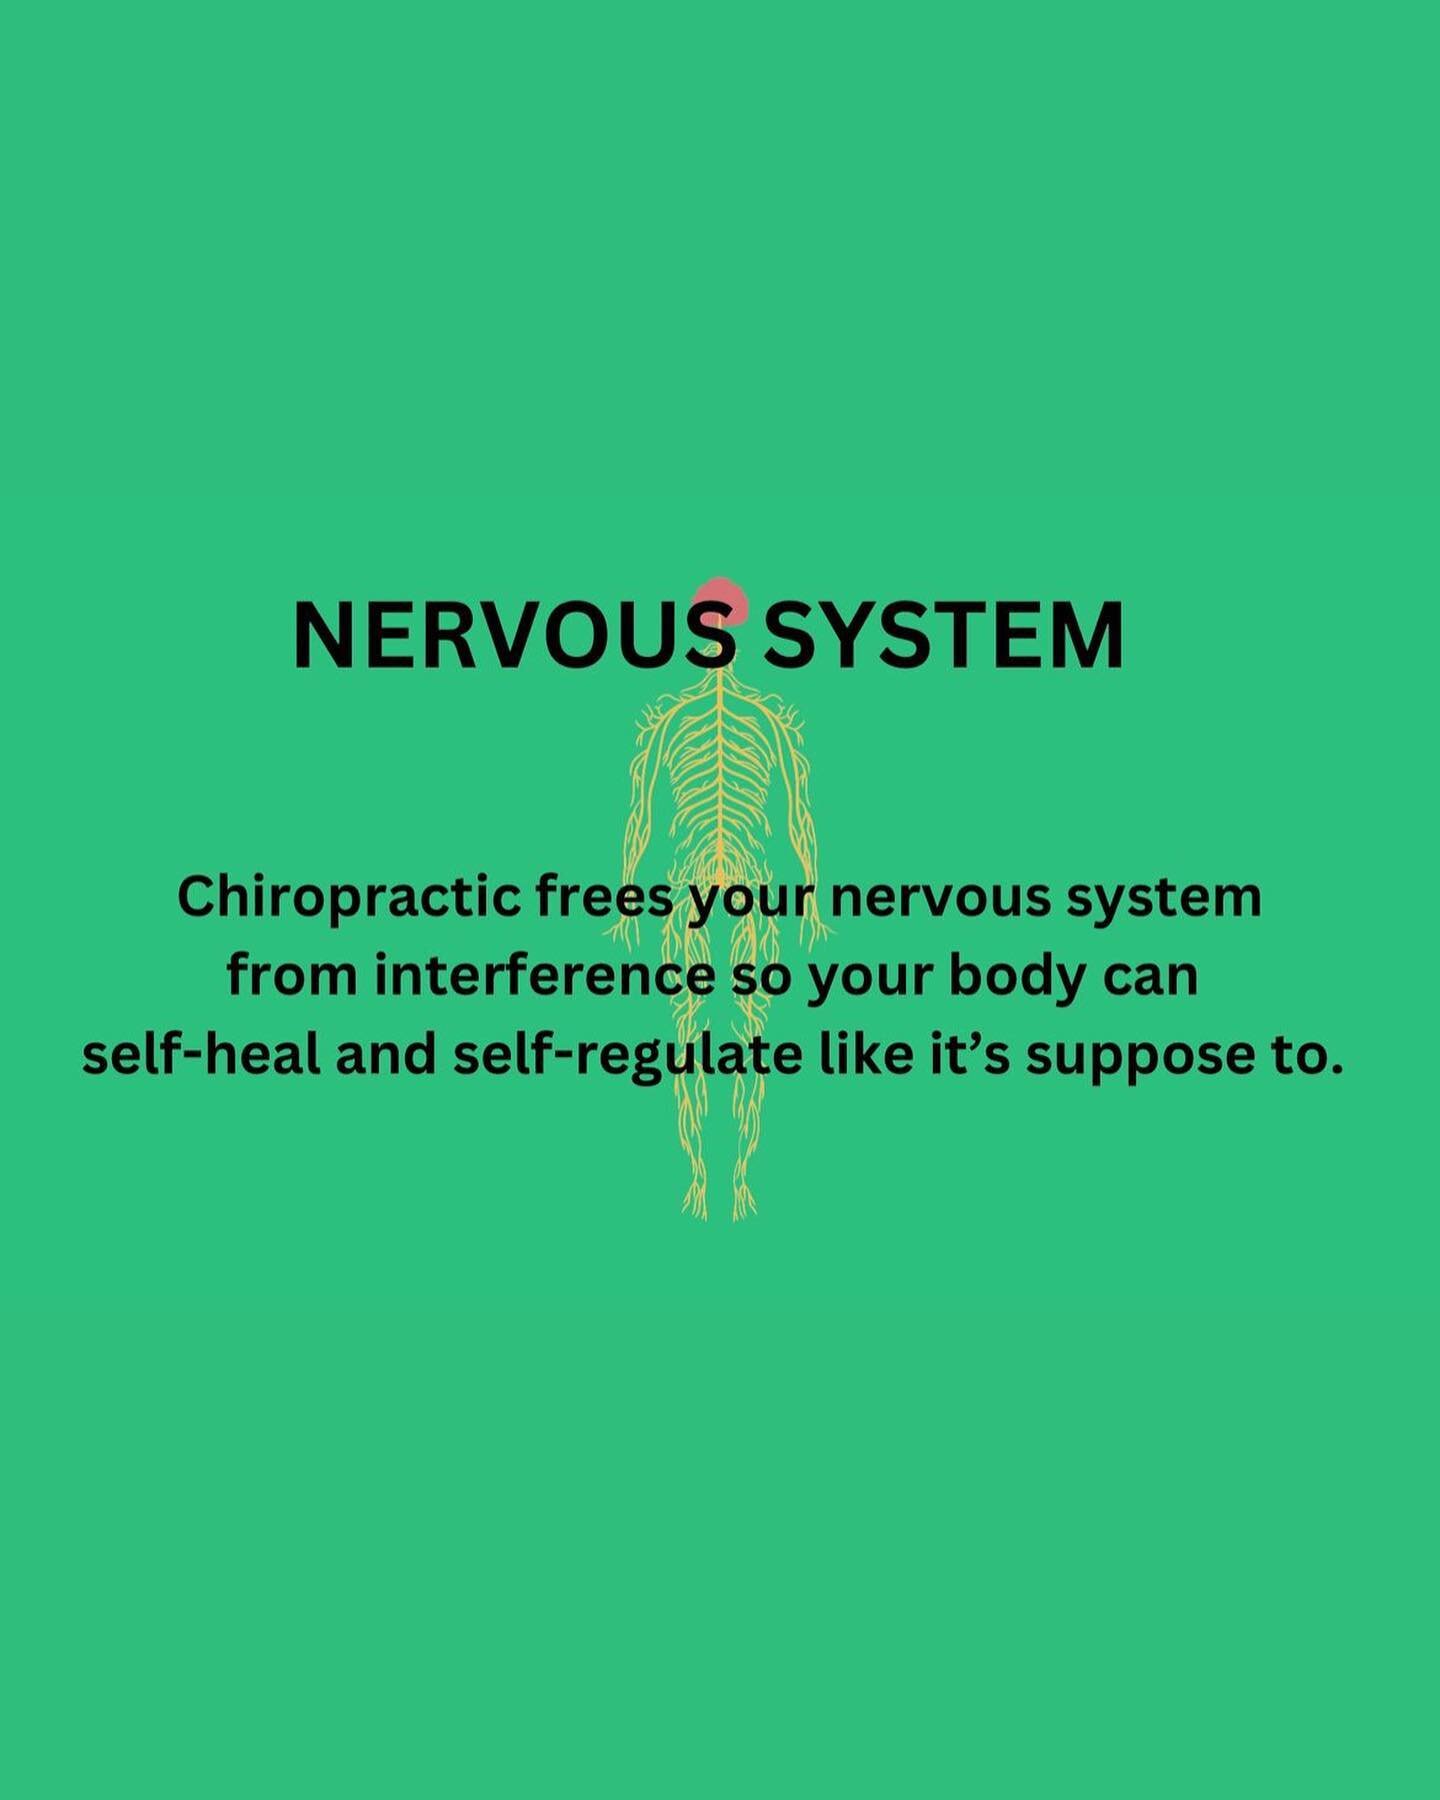 #nerve #nervous #nervoussystem #chiropractic #chiropractor #health #free #subluxation #adjustment